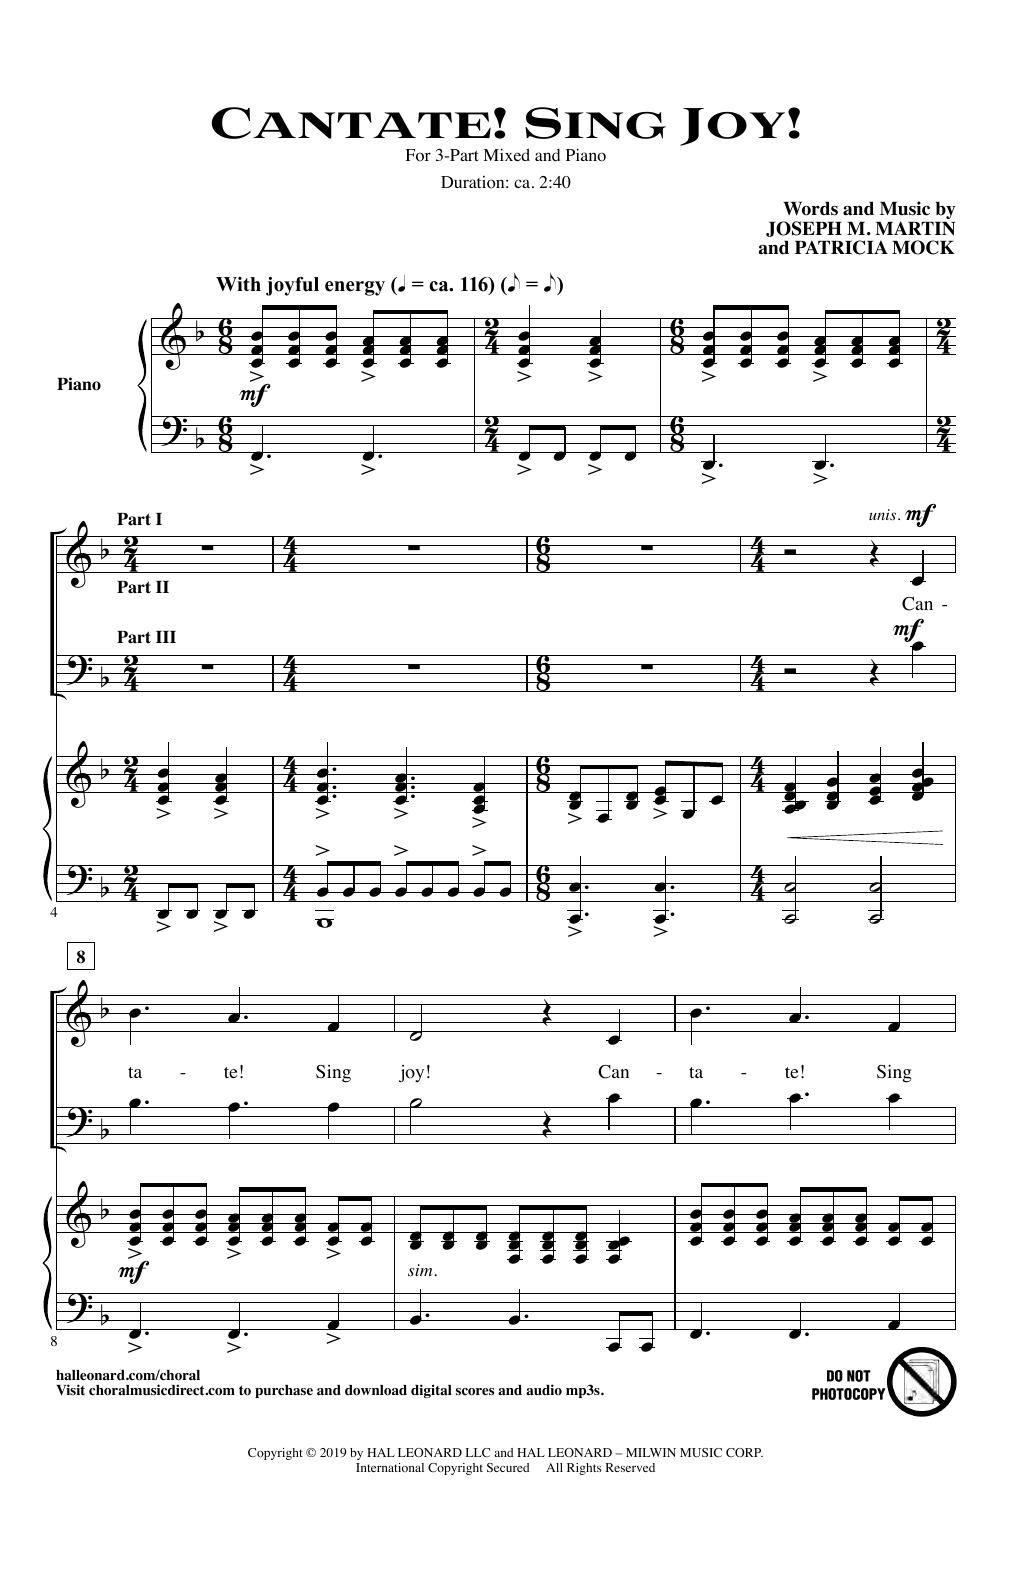 Joseph Martin & Patricia Mock Cantate! Sing Joy! Sheet Music Notes & Chords for 3-Part Mixed Choir - Download or Print PDF